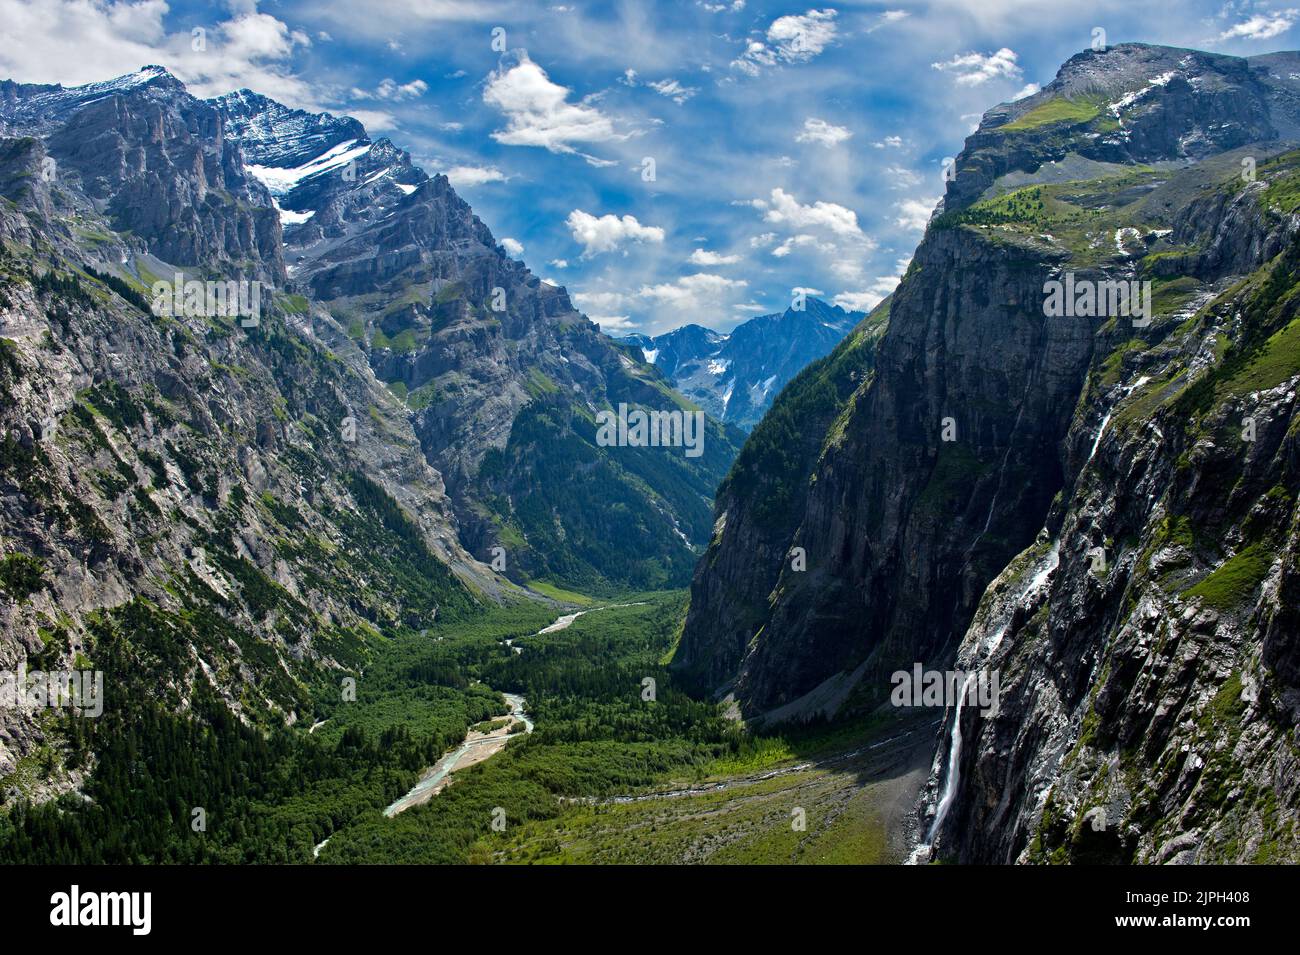 Arquetipo geológico, U-shaped valle Gasterntal, Kandersteg, Oberland bernés, Suiza Foto de stock